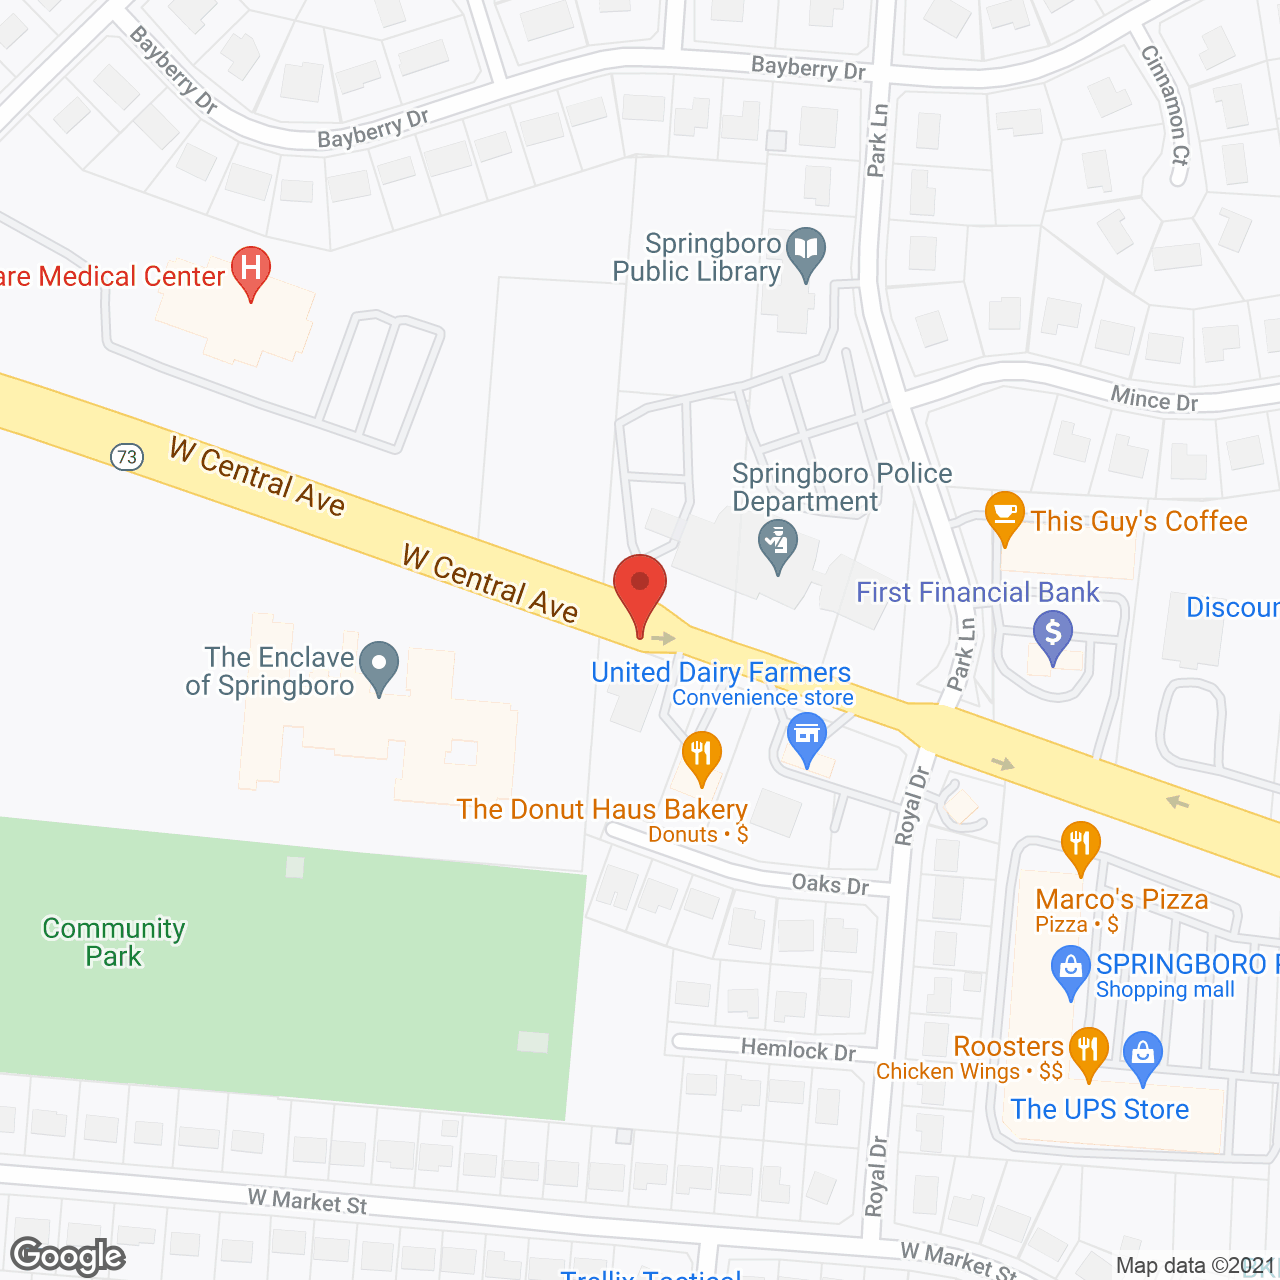 The Enclave of Springboro in google map